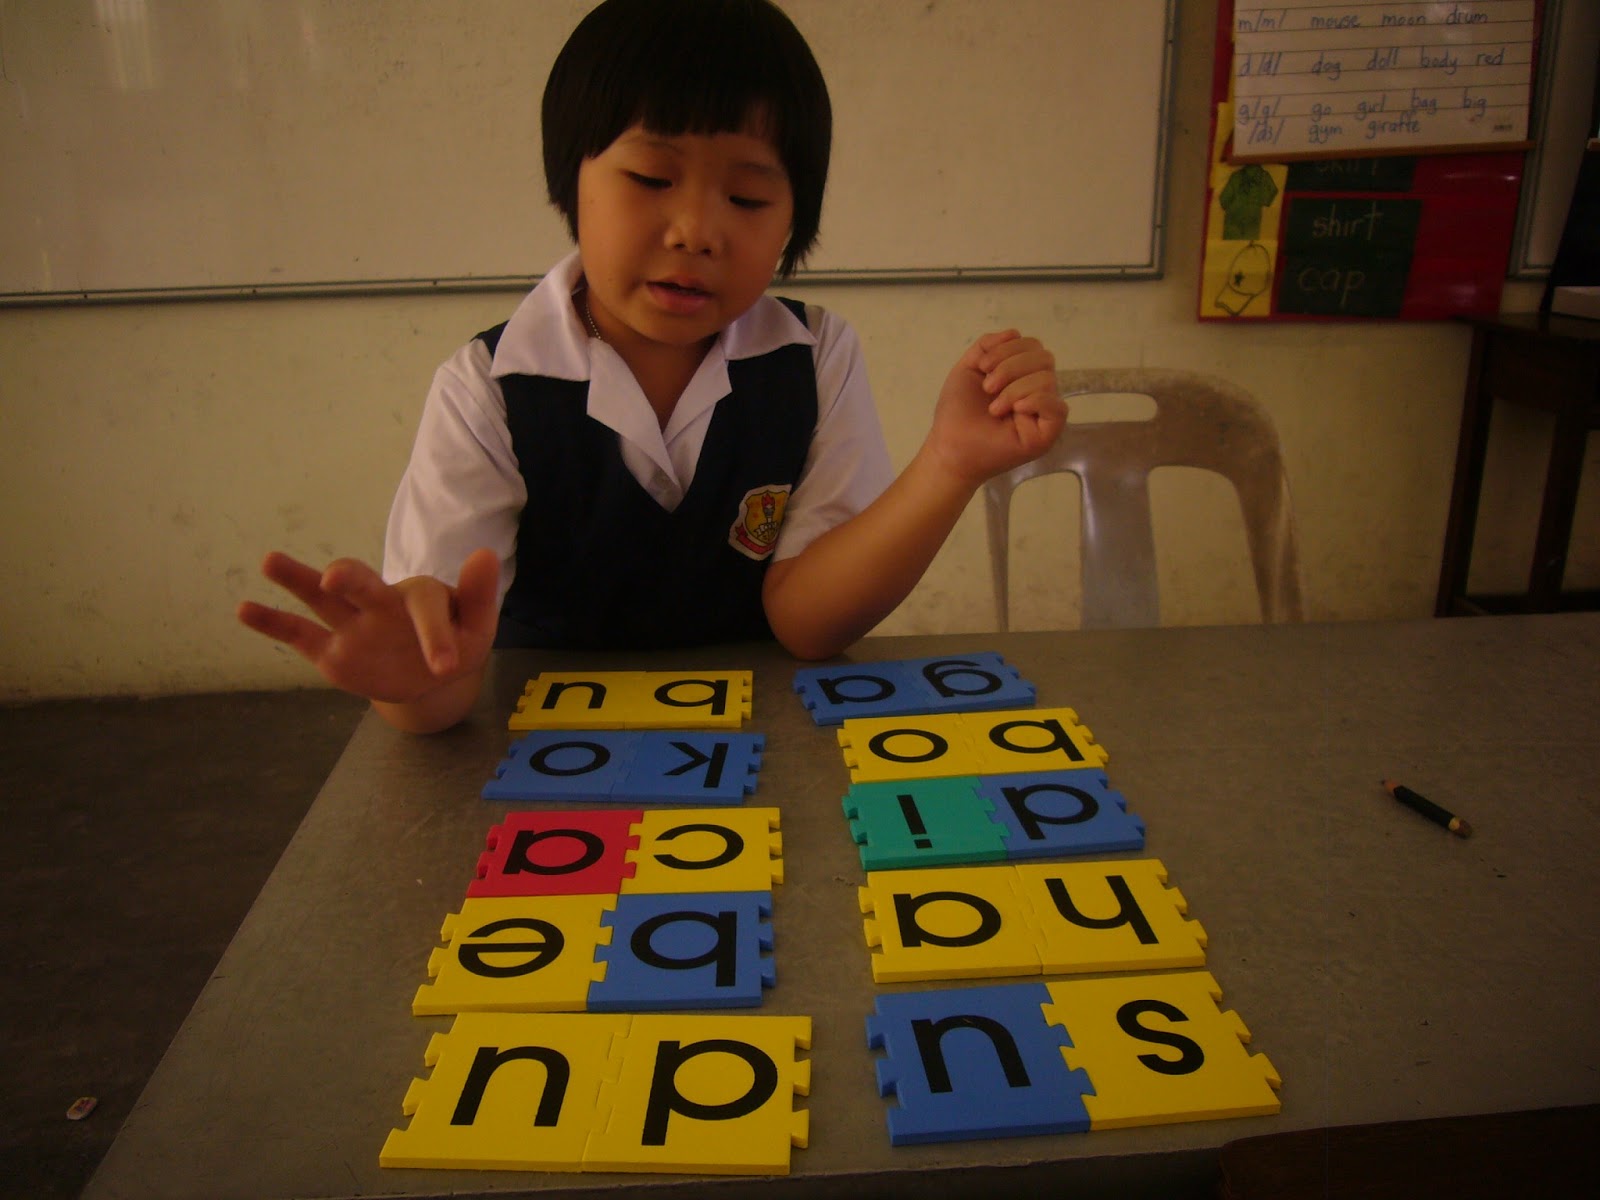 Gambar Muird Belajar Suku Kata Gambar LINUS Gambar diambil di kelas Tahun 1 di SJKC Changkat Kinding Tg Rambutan pada 22 4 2013